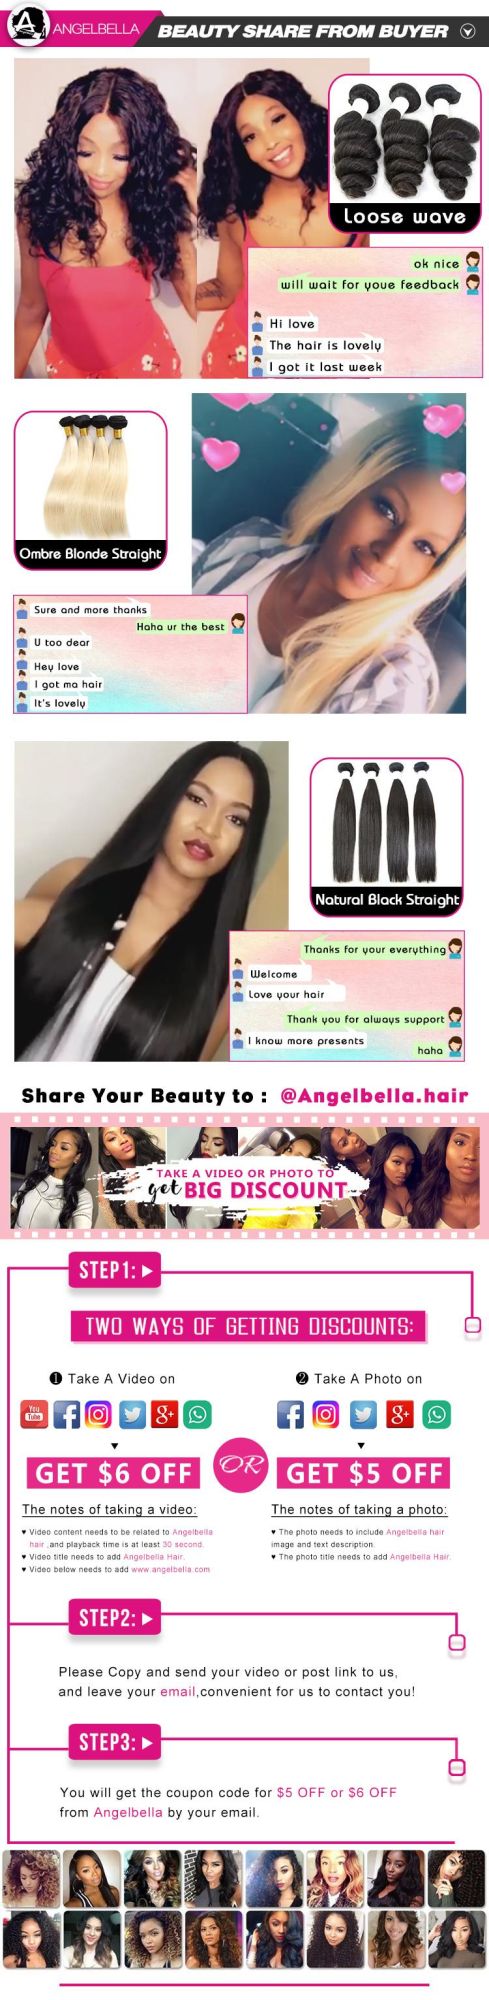 Angelbella Body Wave Lace Closure Human Remy Hair 5X5 Closures Silk Top Closures for Black Women